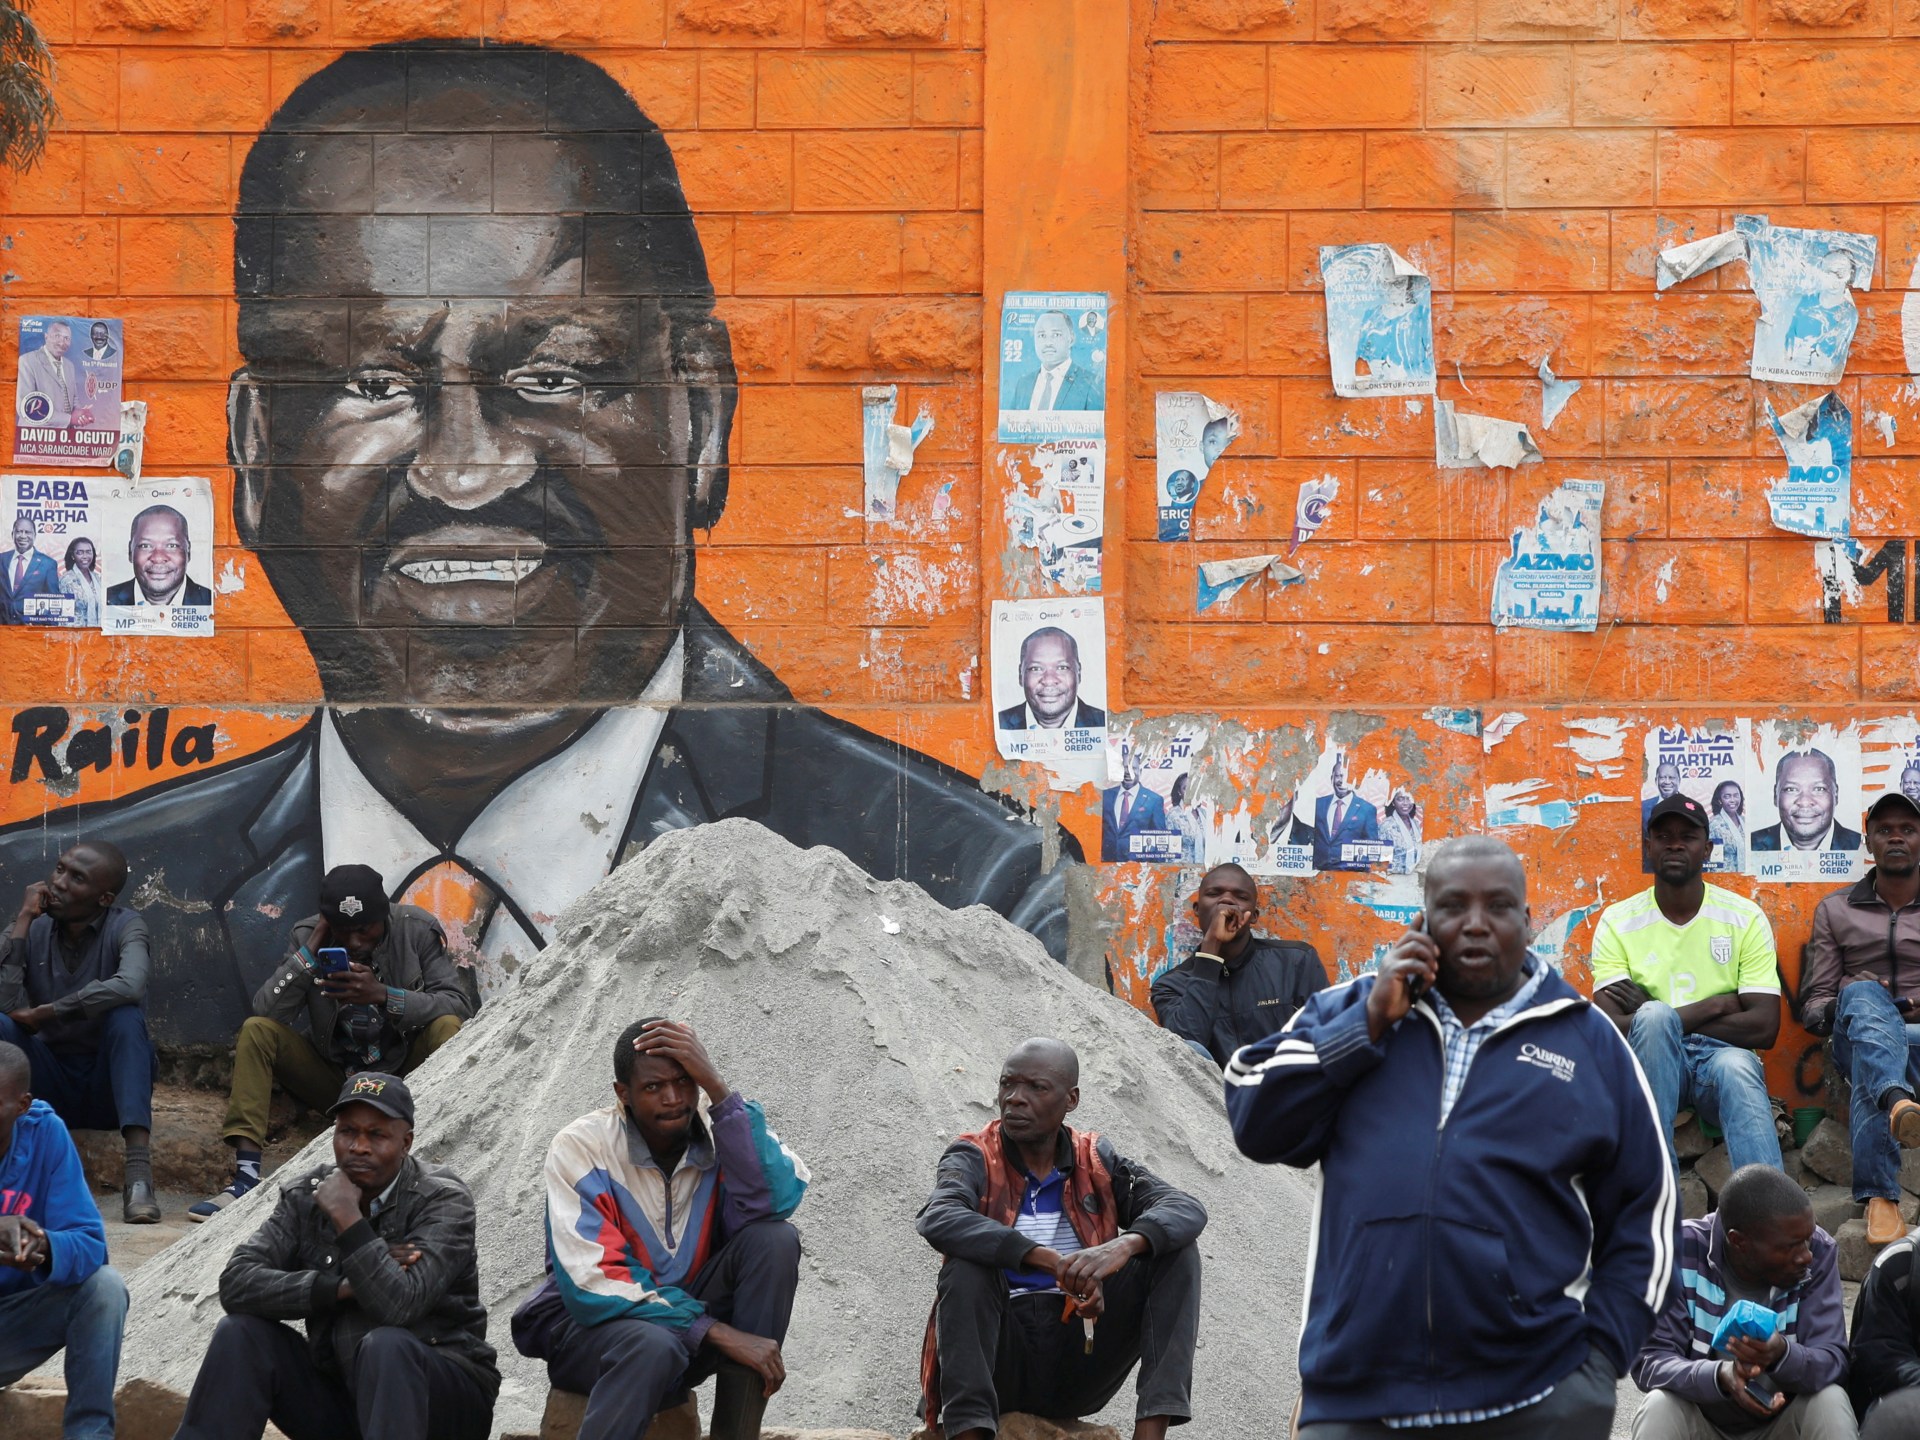 Raila Odinga ahead in Kenya’s presidential race: Early results